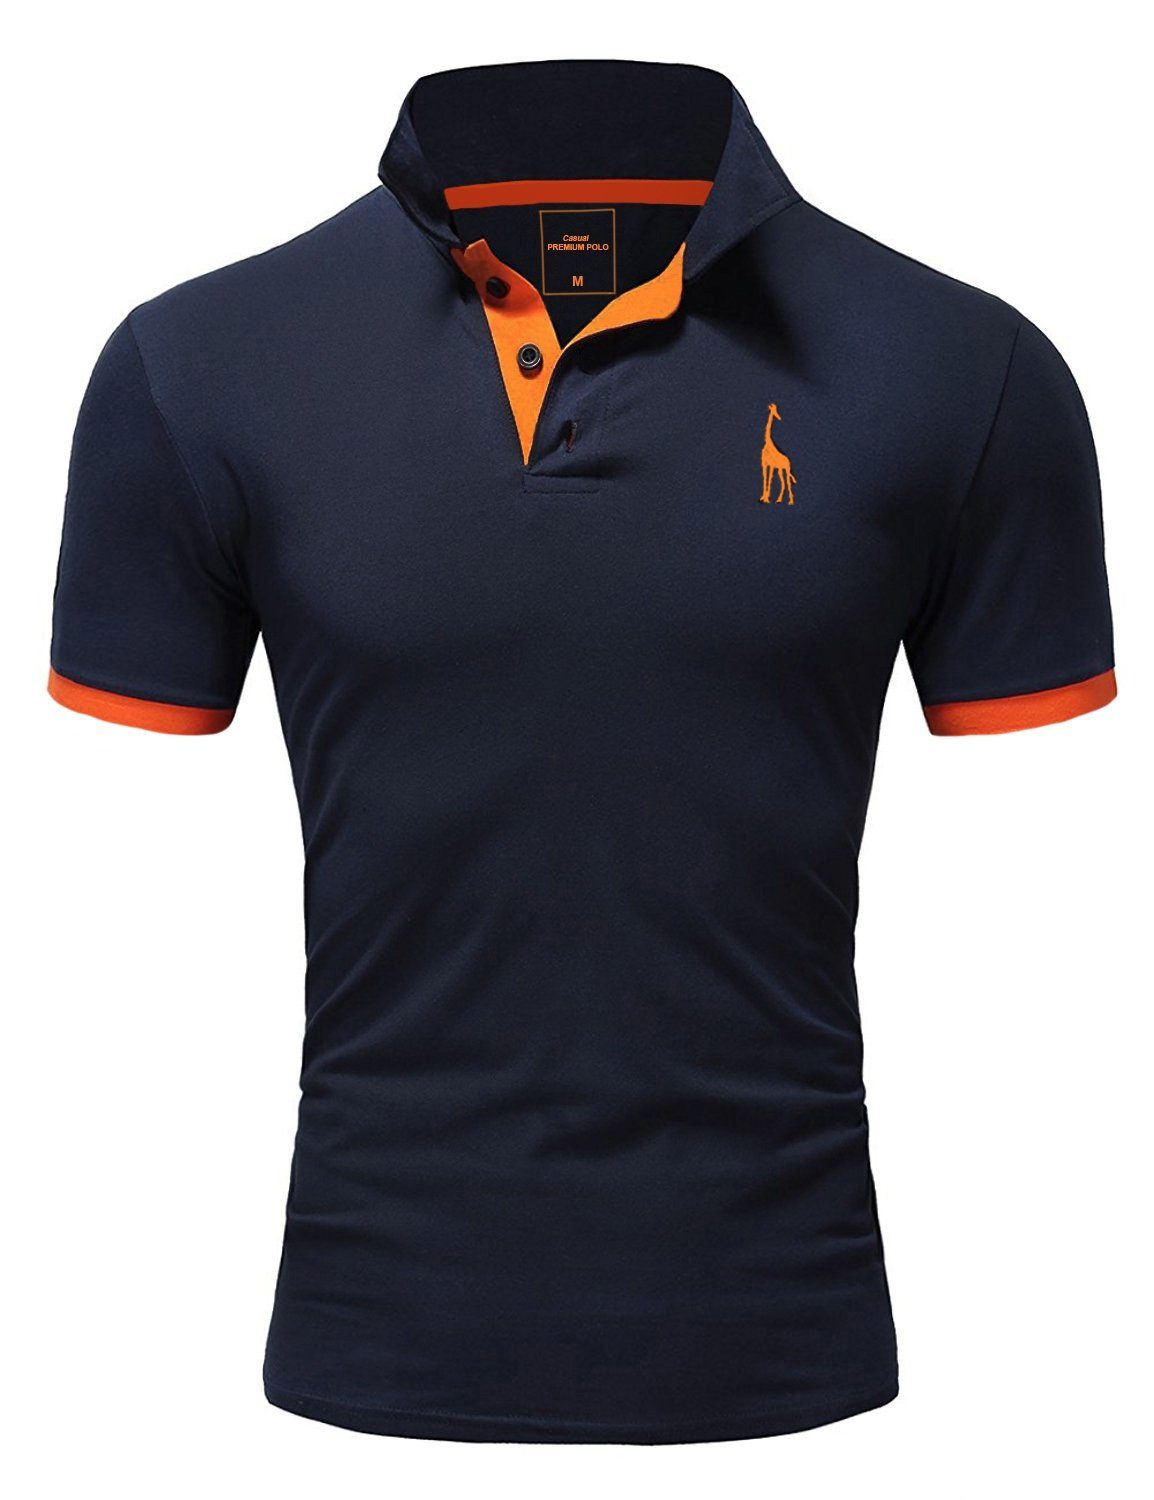 REPUBLIX Poloshirt JOSEPH Herren Basic Kurzarm Kontrast Polo Hemd Navyblau/Orange